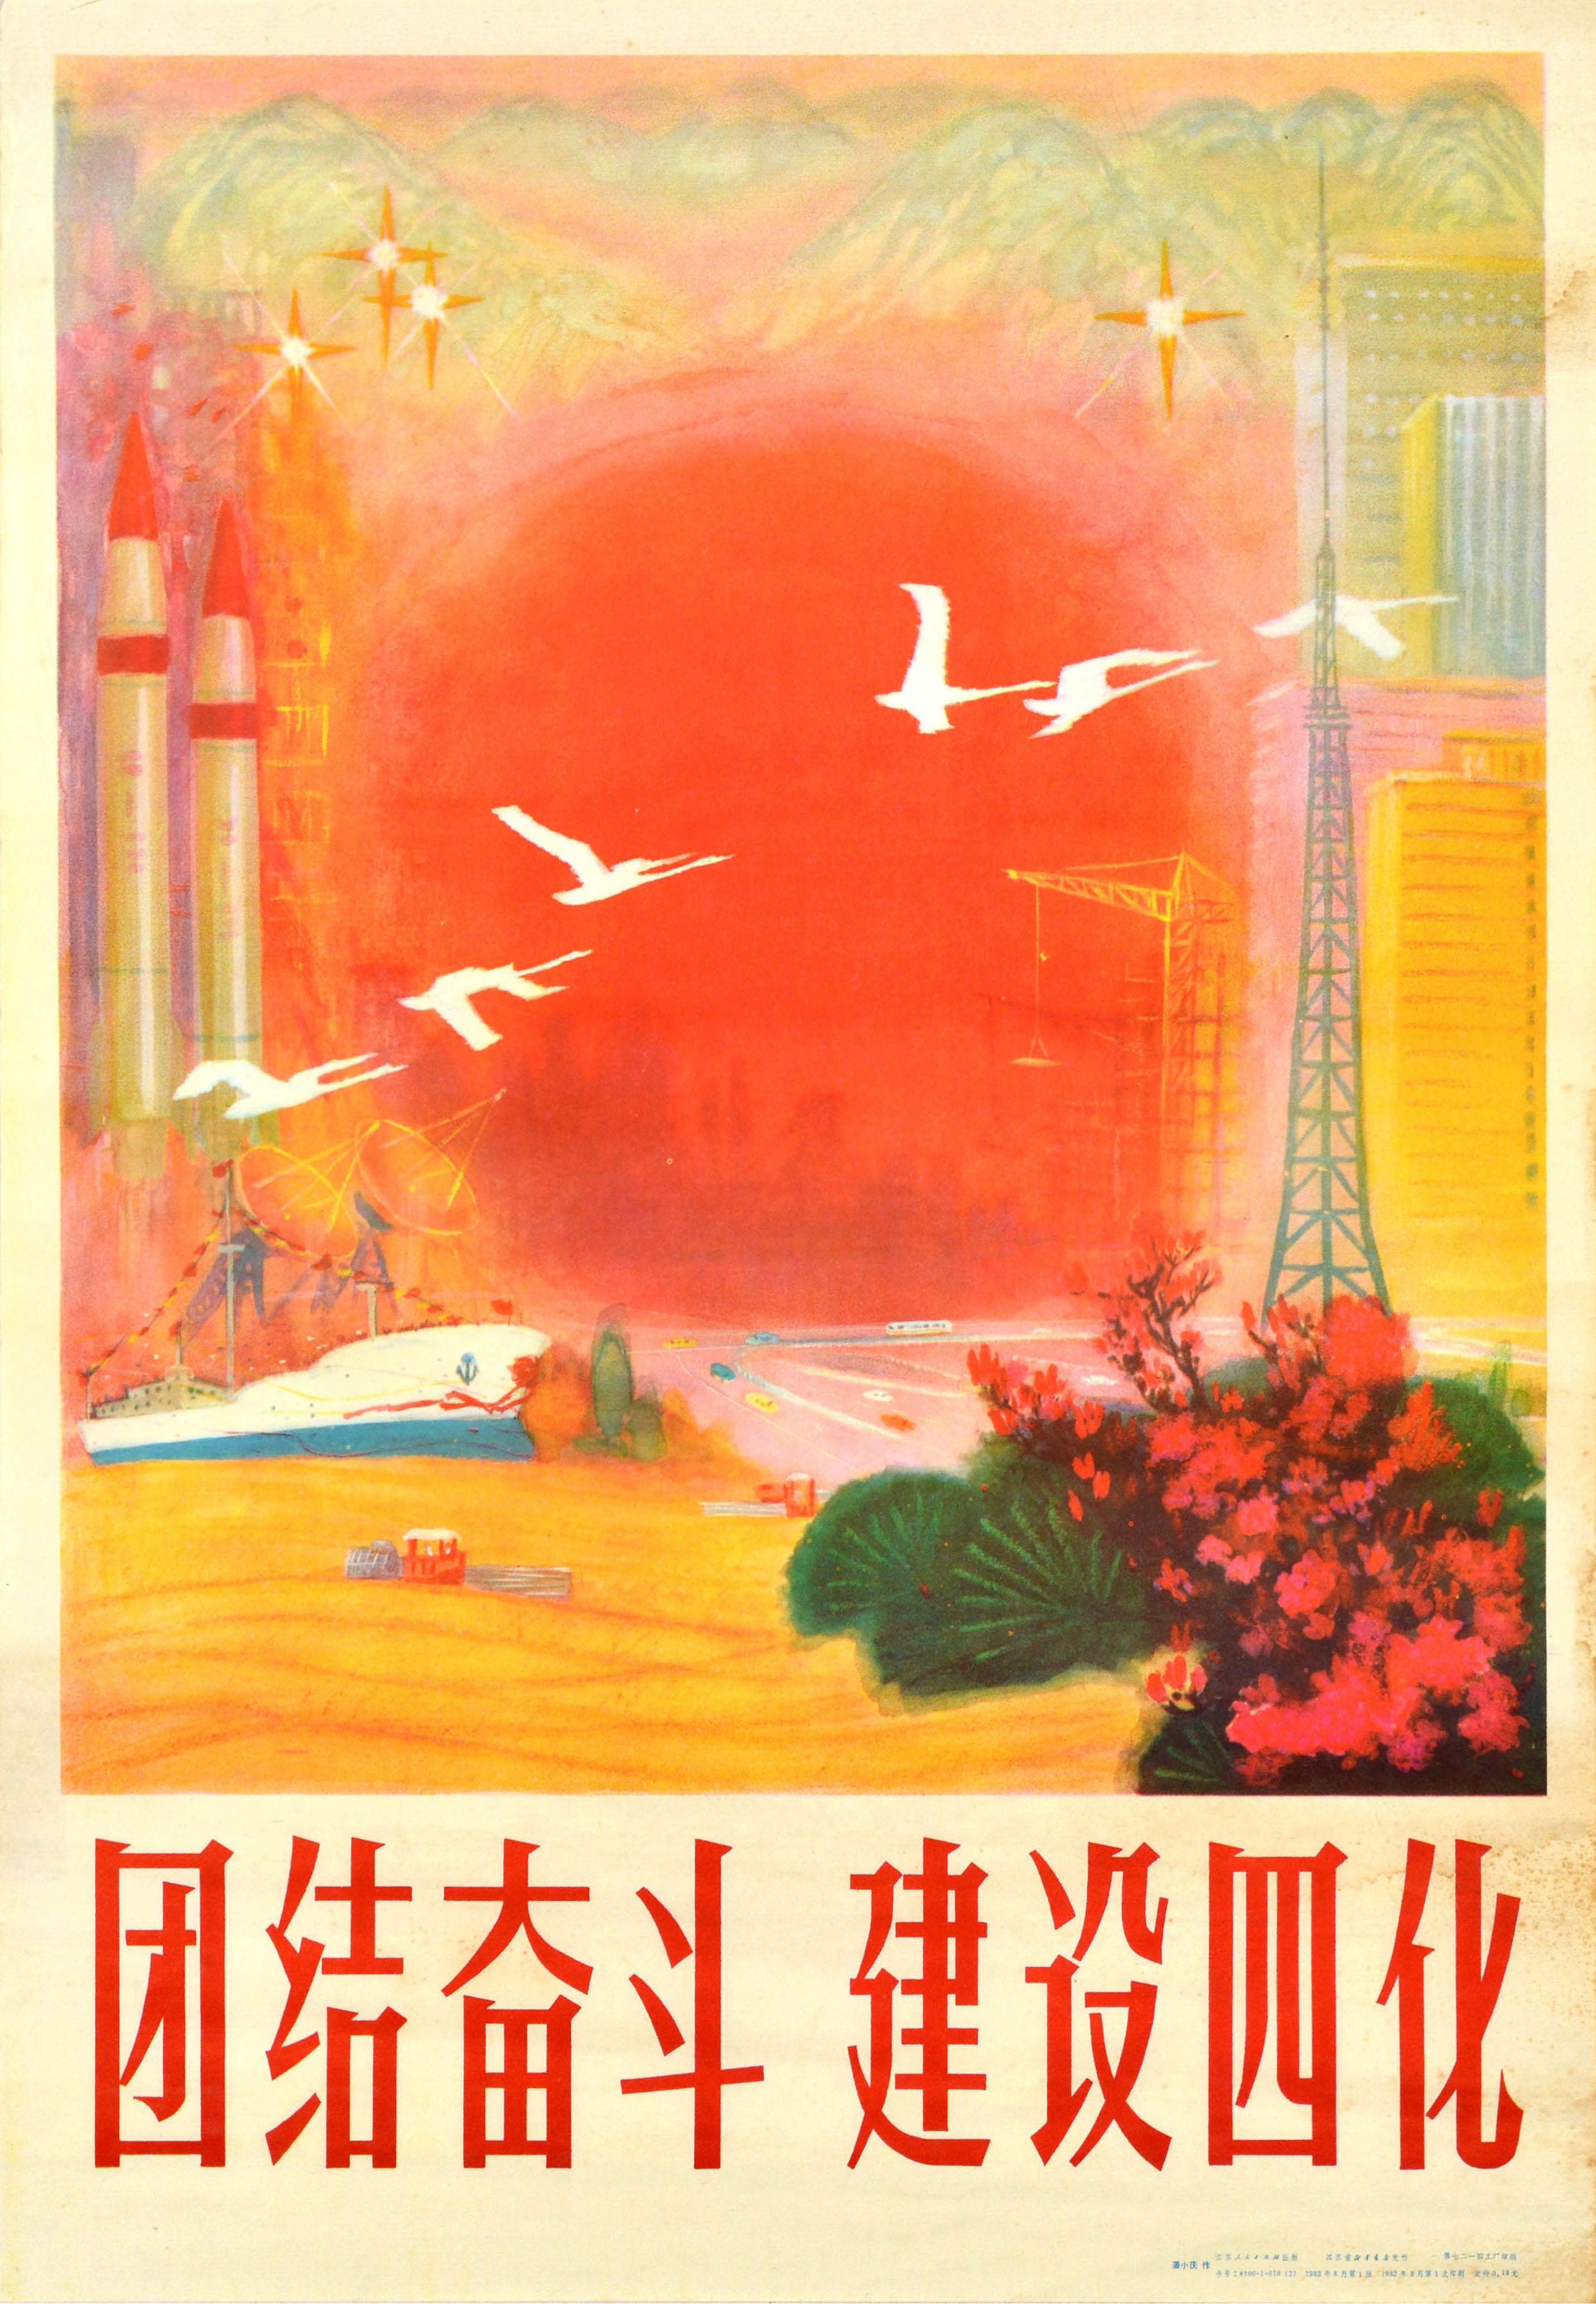 Unknown Print - Original Vintage Chinese Communist Party Propaganda Poster Four Modernisations